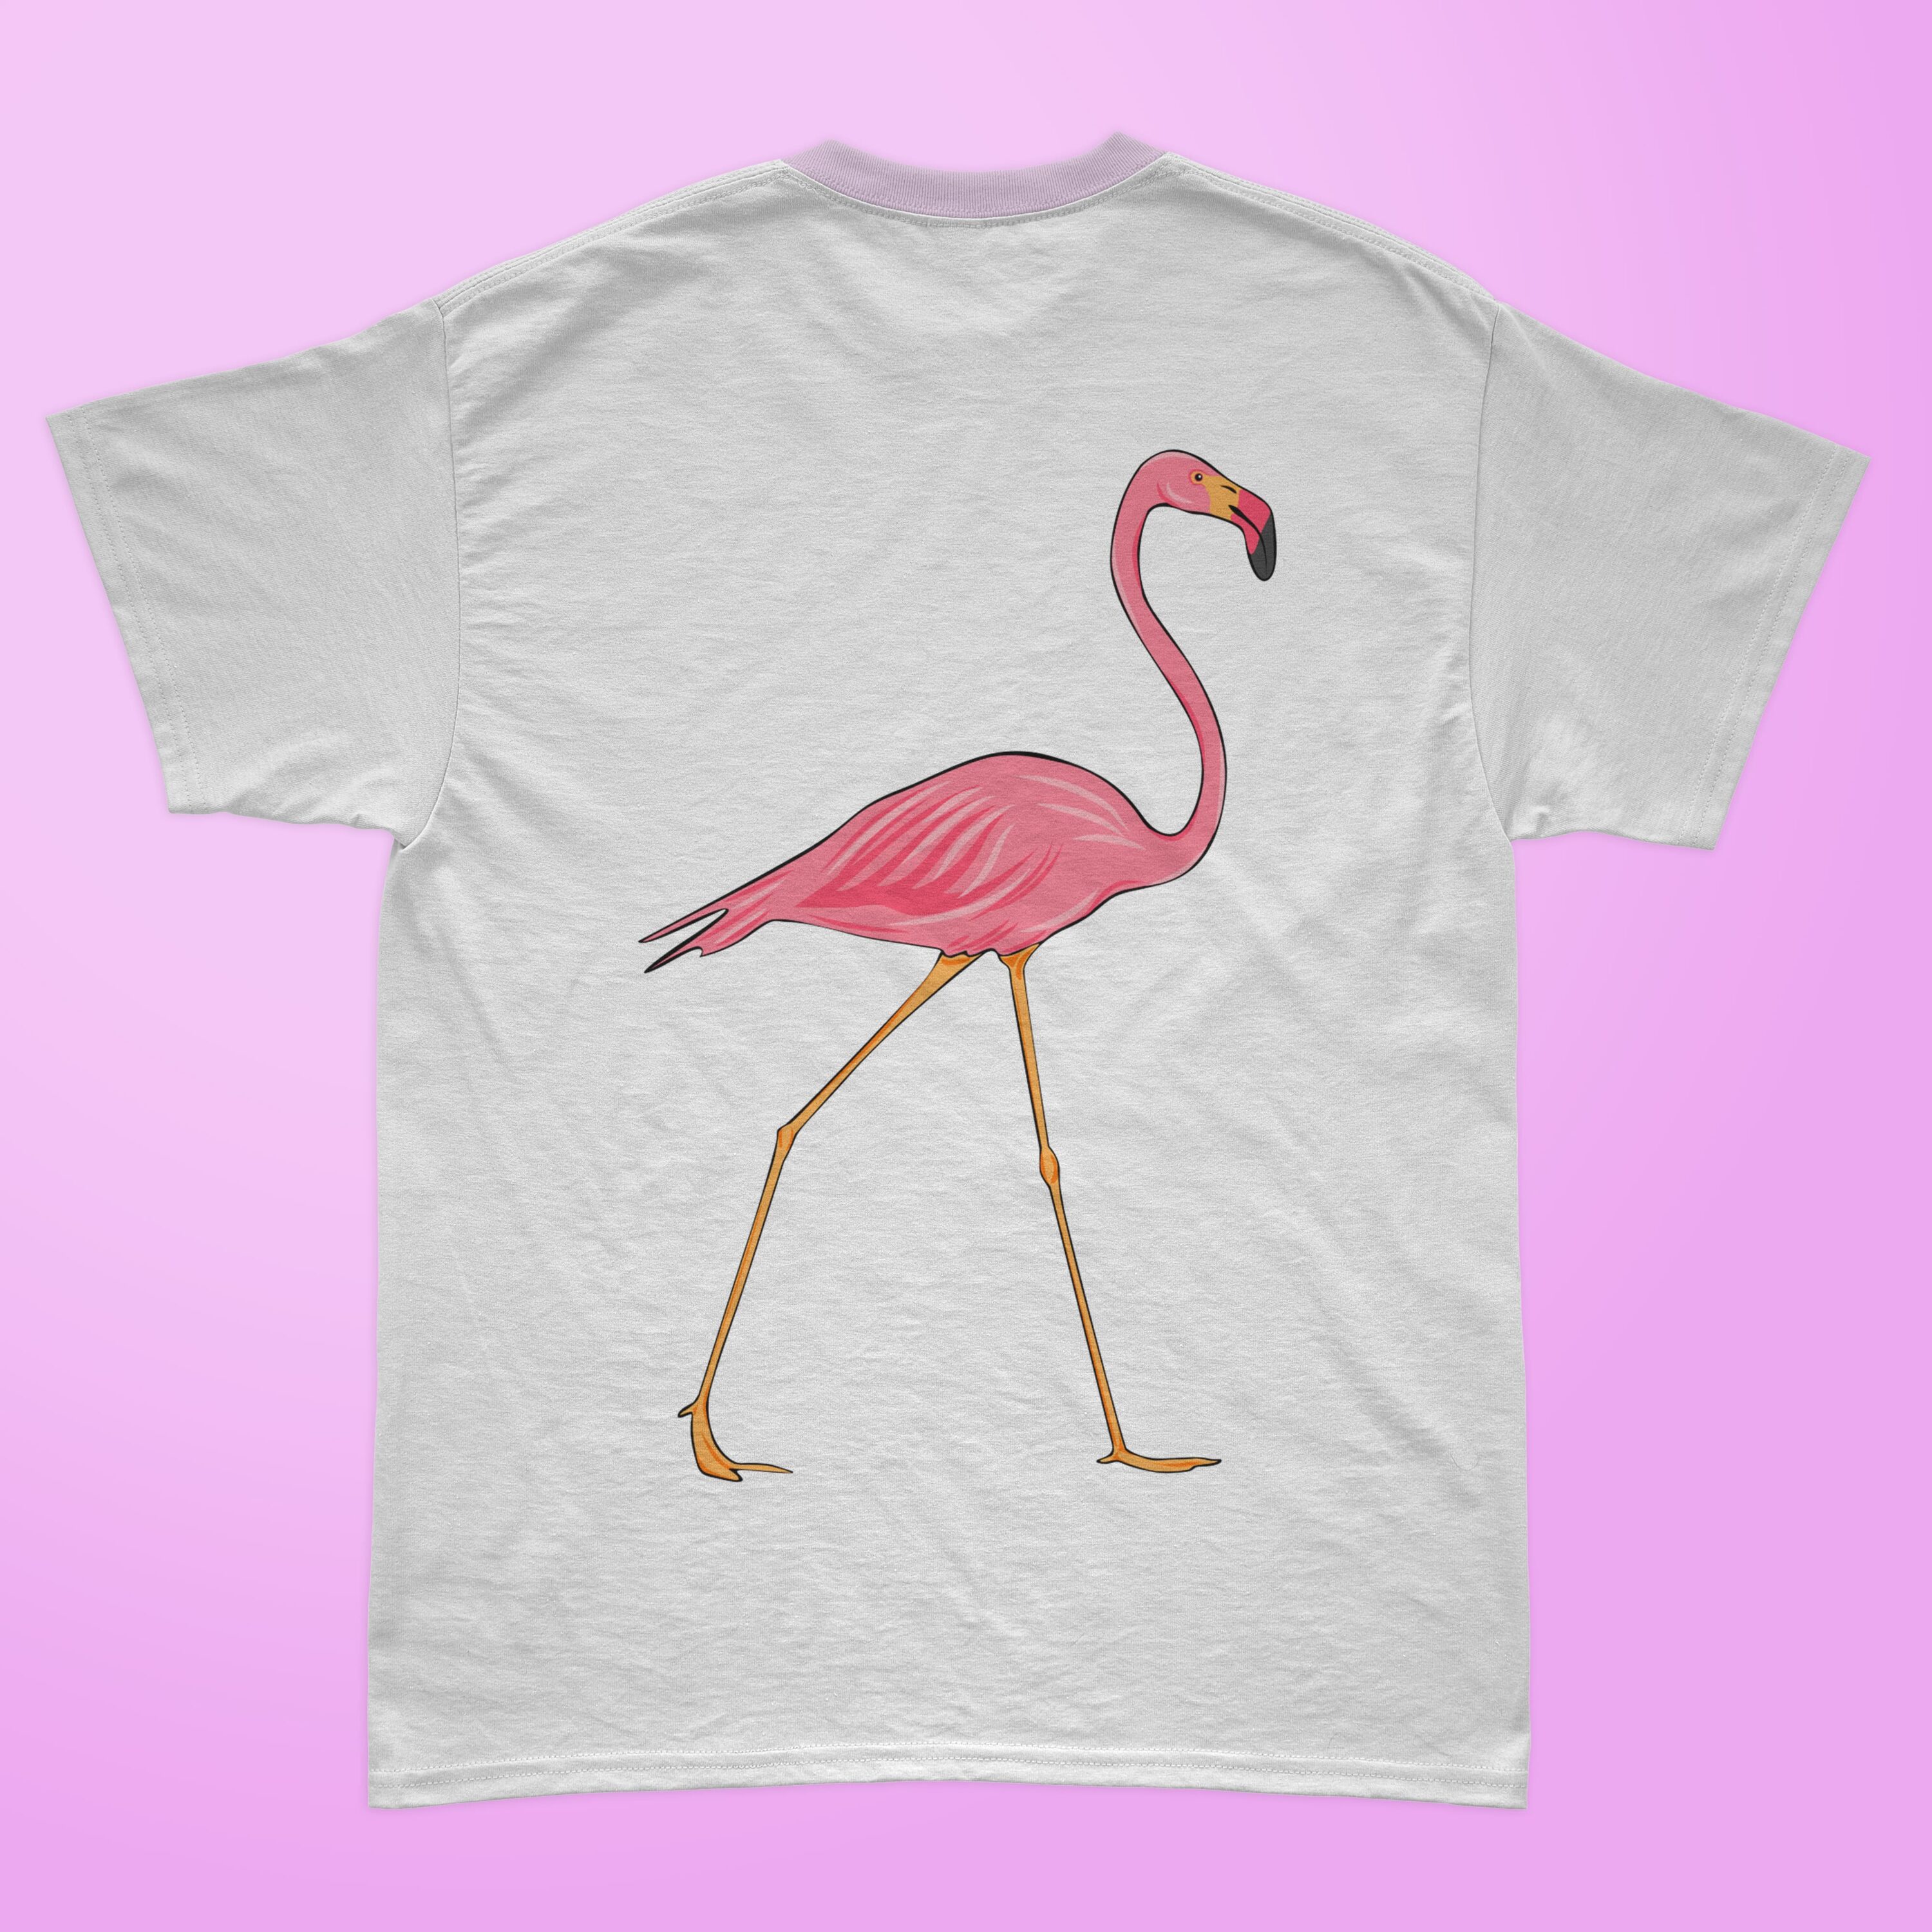 Walking flamingo on the classic white t-shirt.